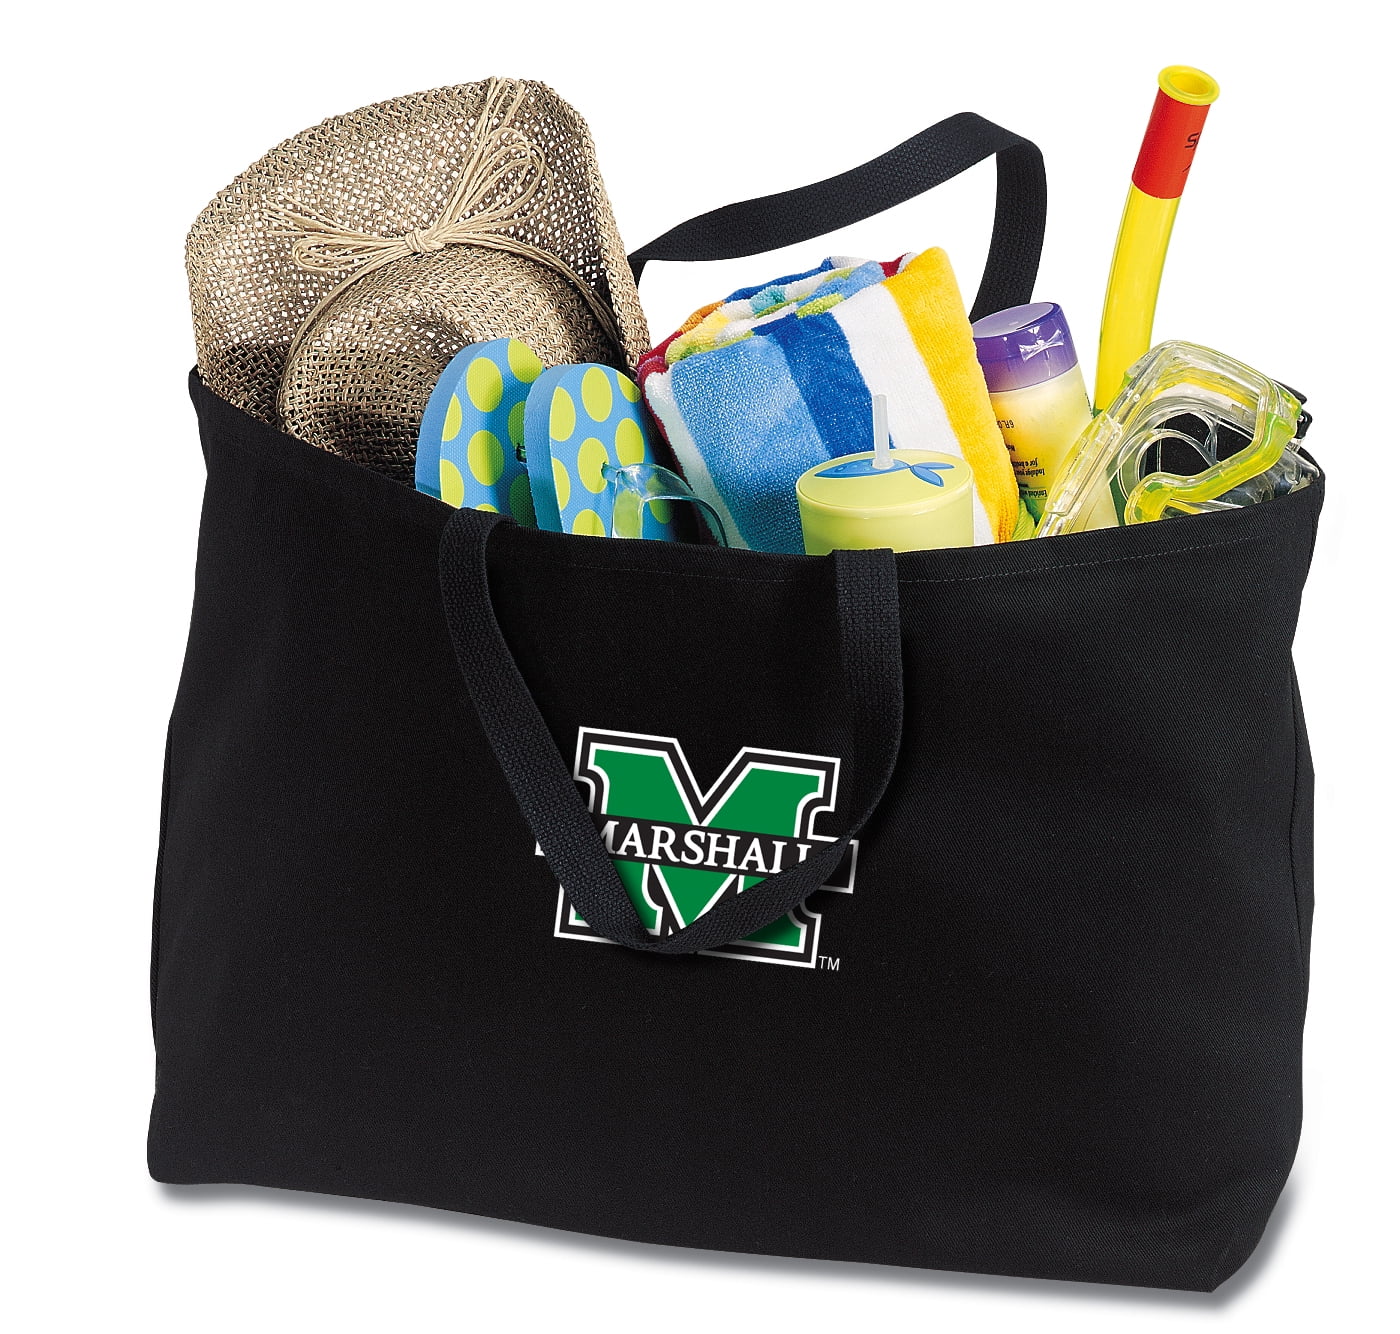 NEW Marshalls Large Reusable Shopping Bag - Holiday Together